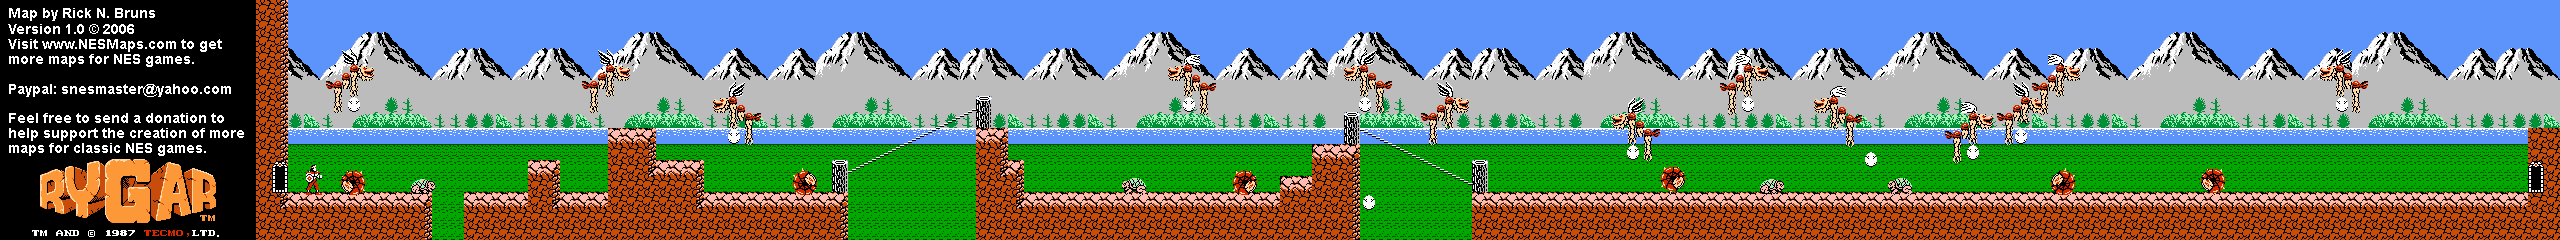 Rygar - Primeval Mountain - NES Map